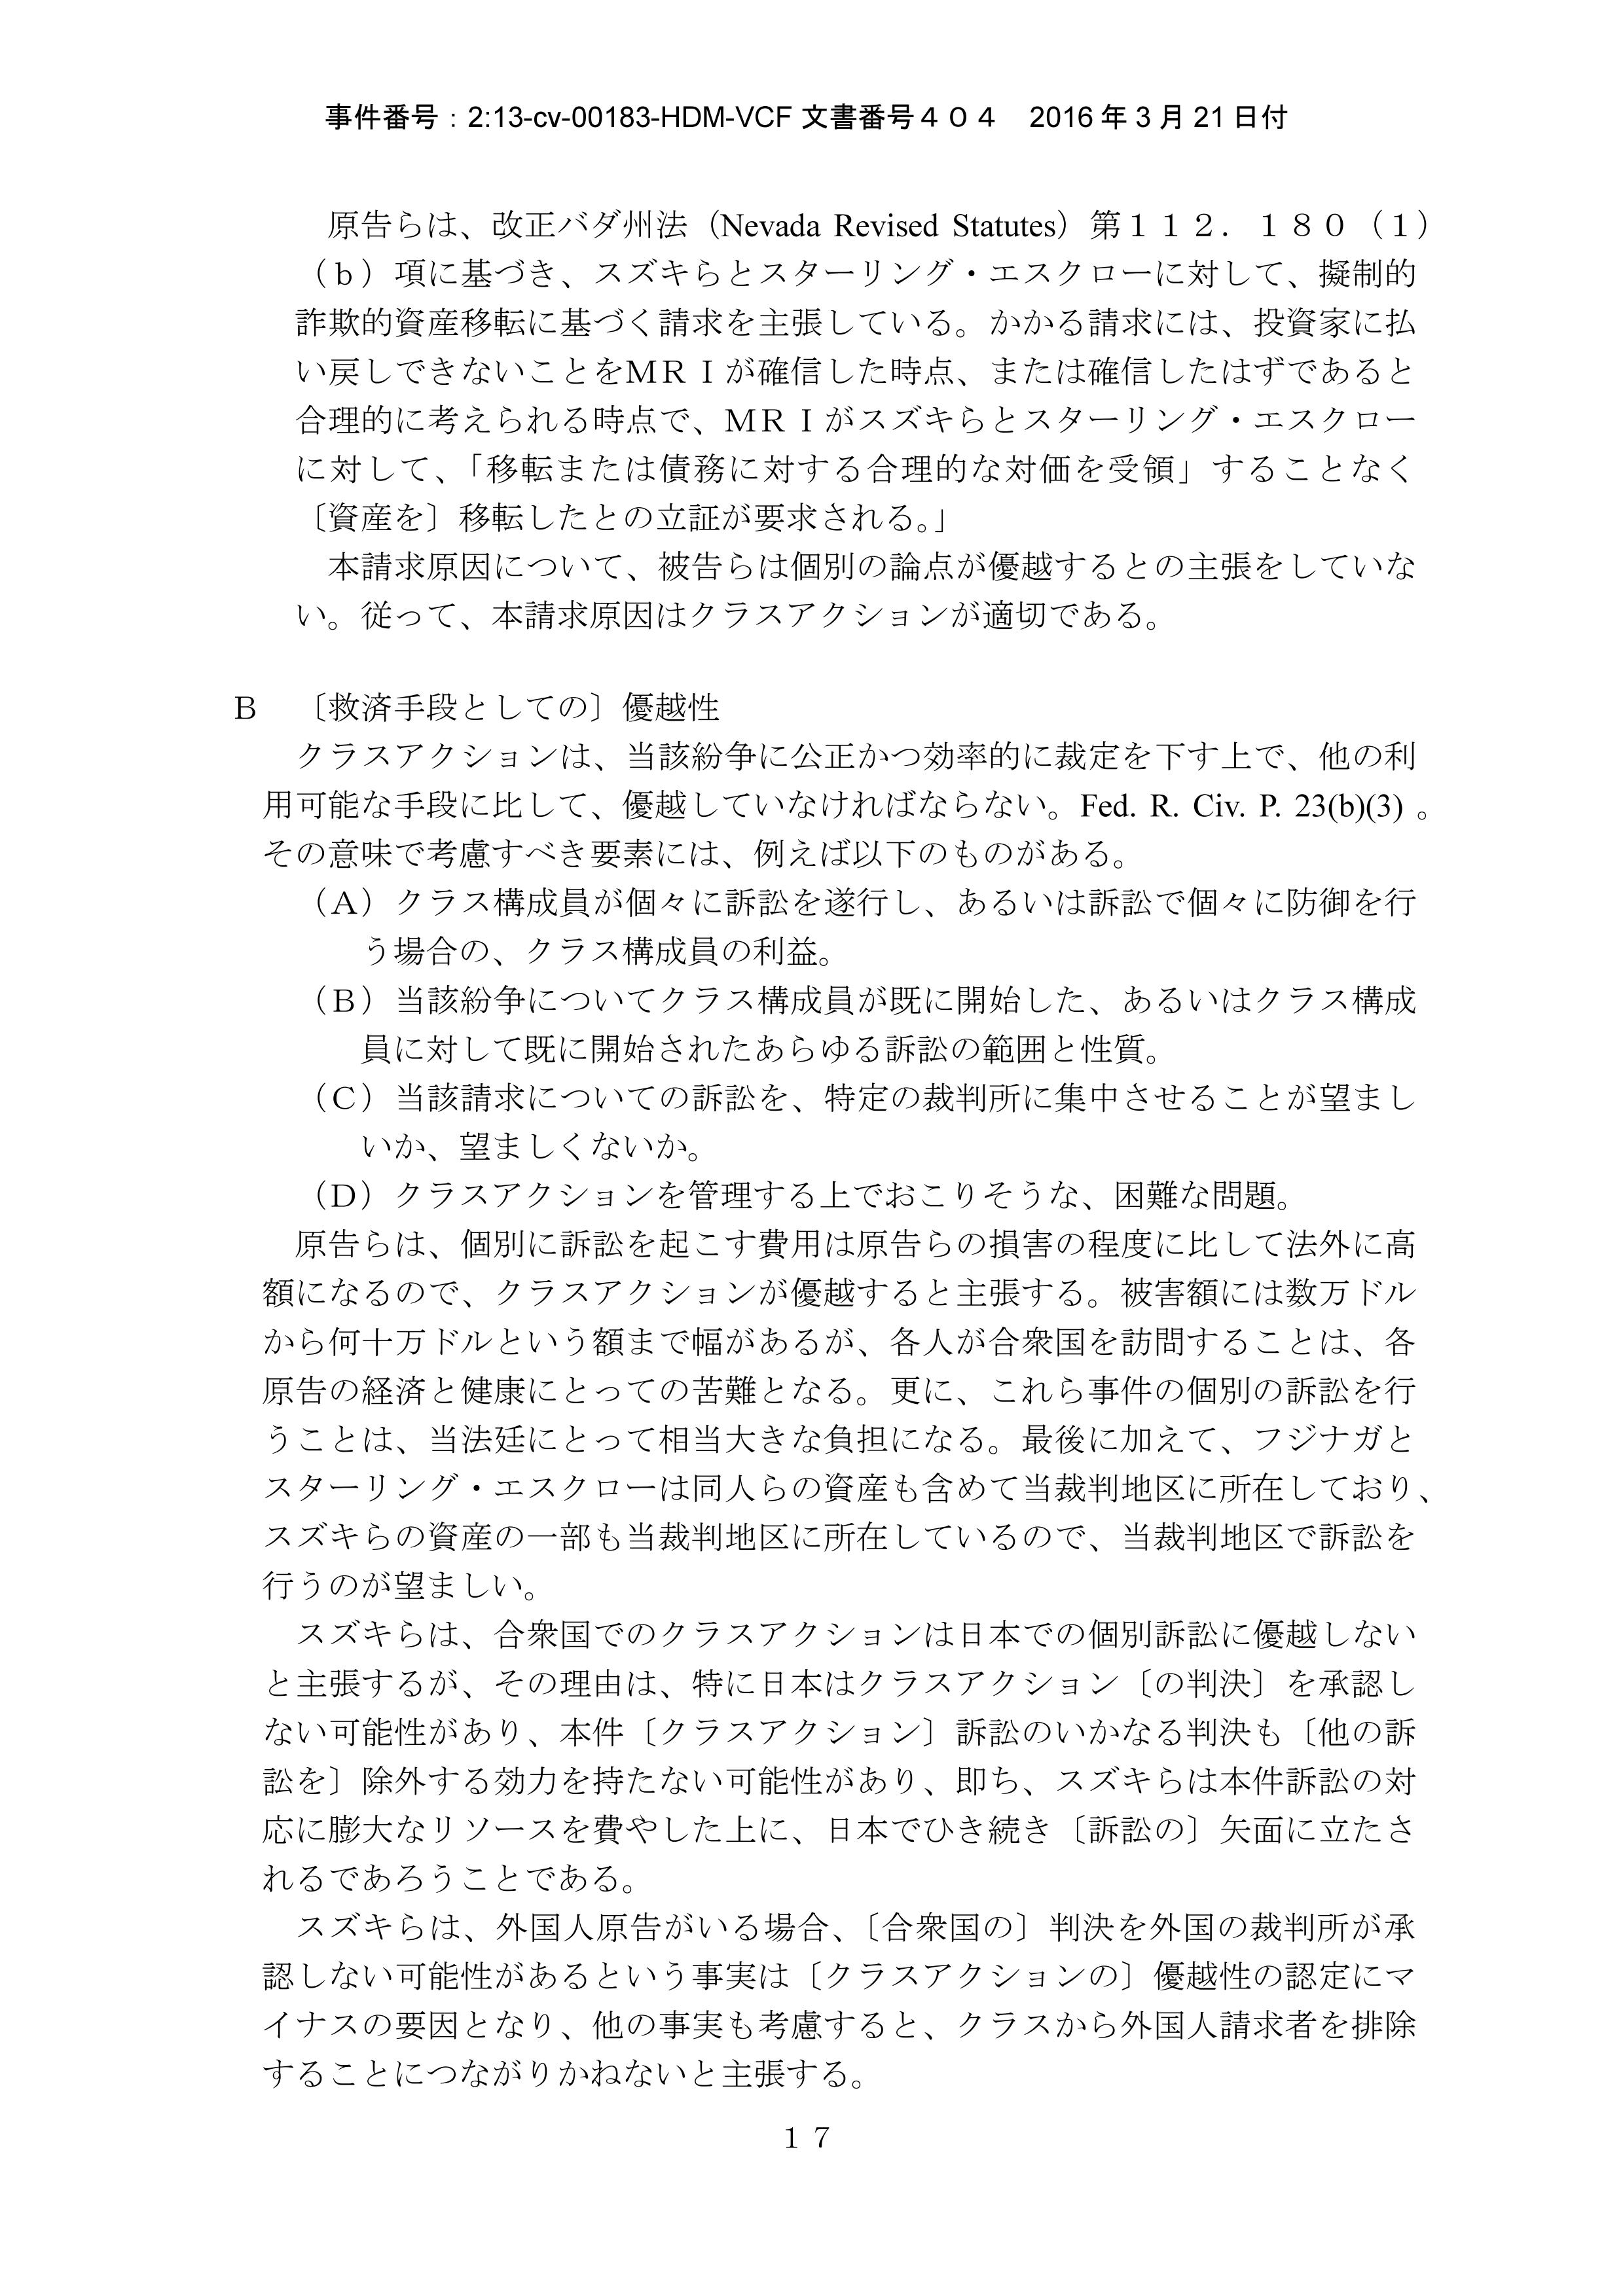 CA_Dkt 404_Order Granting Class Certification_Japanese translation_17